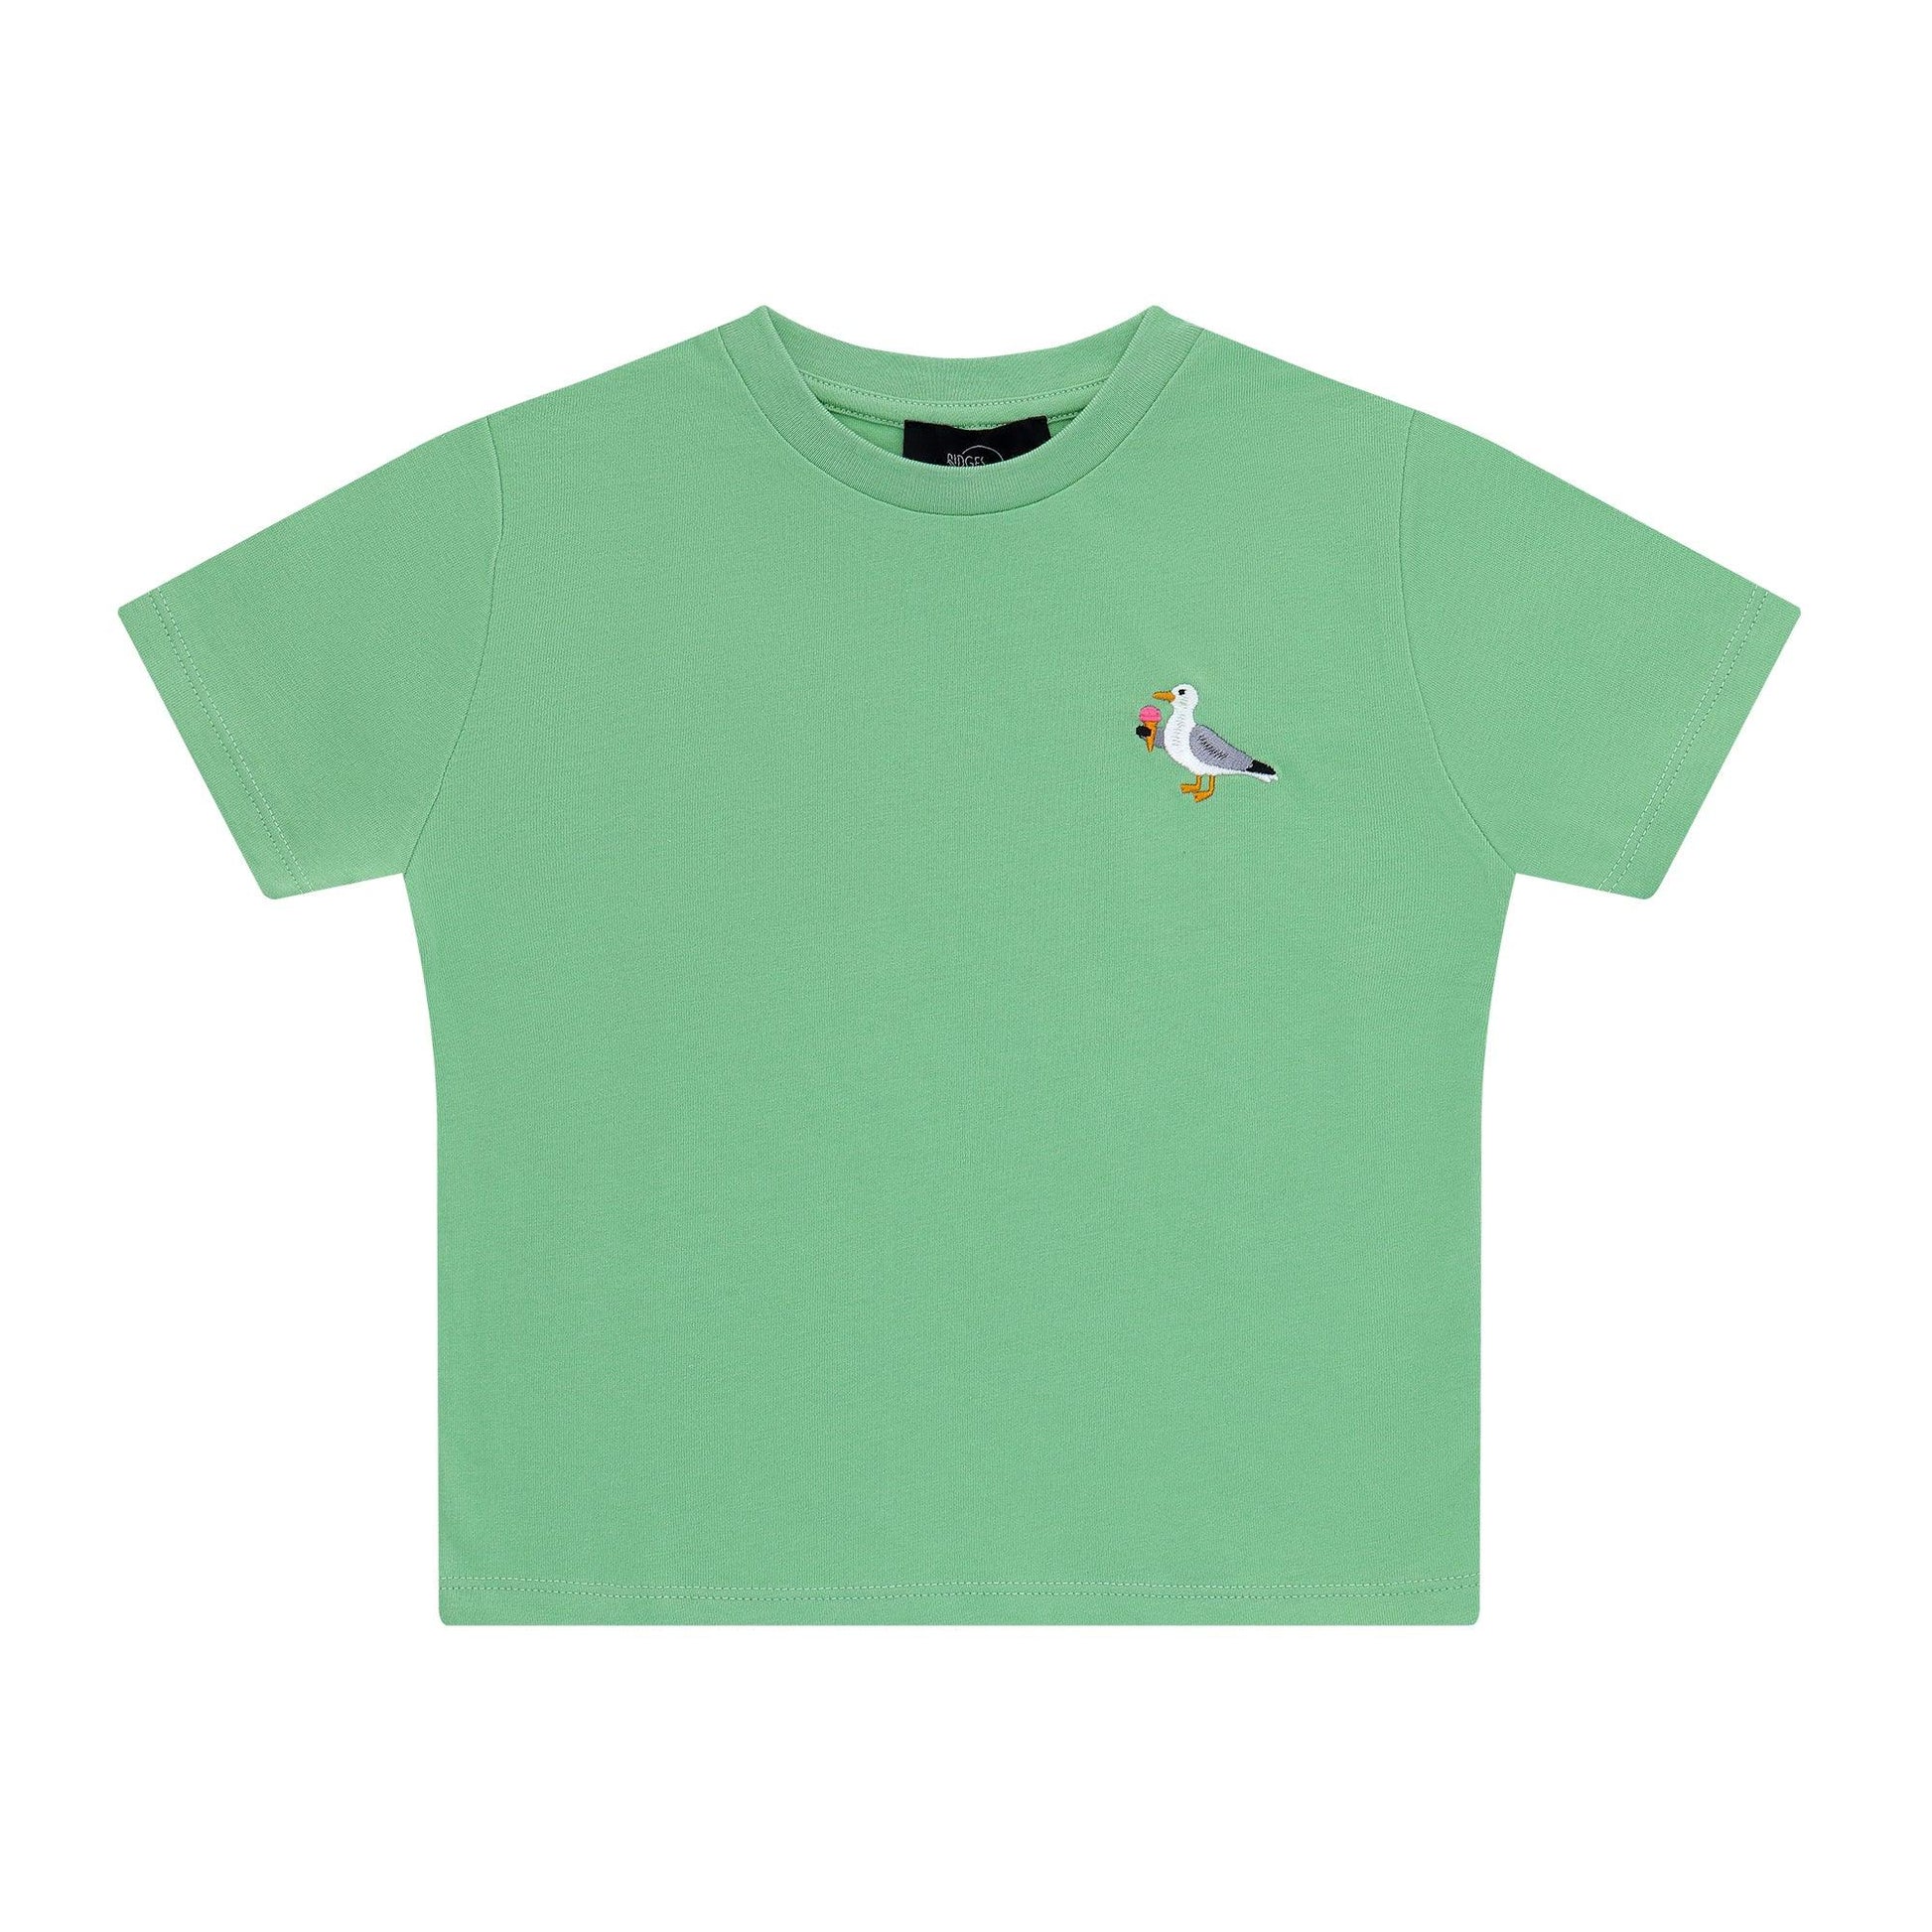 Baby/kids 'Take me to the sea' T-shirt - sea gull - Light grass green - Ridges And Steam